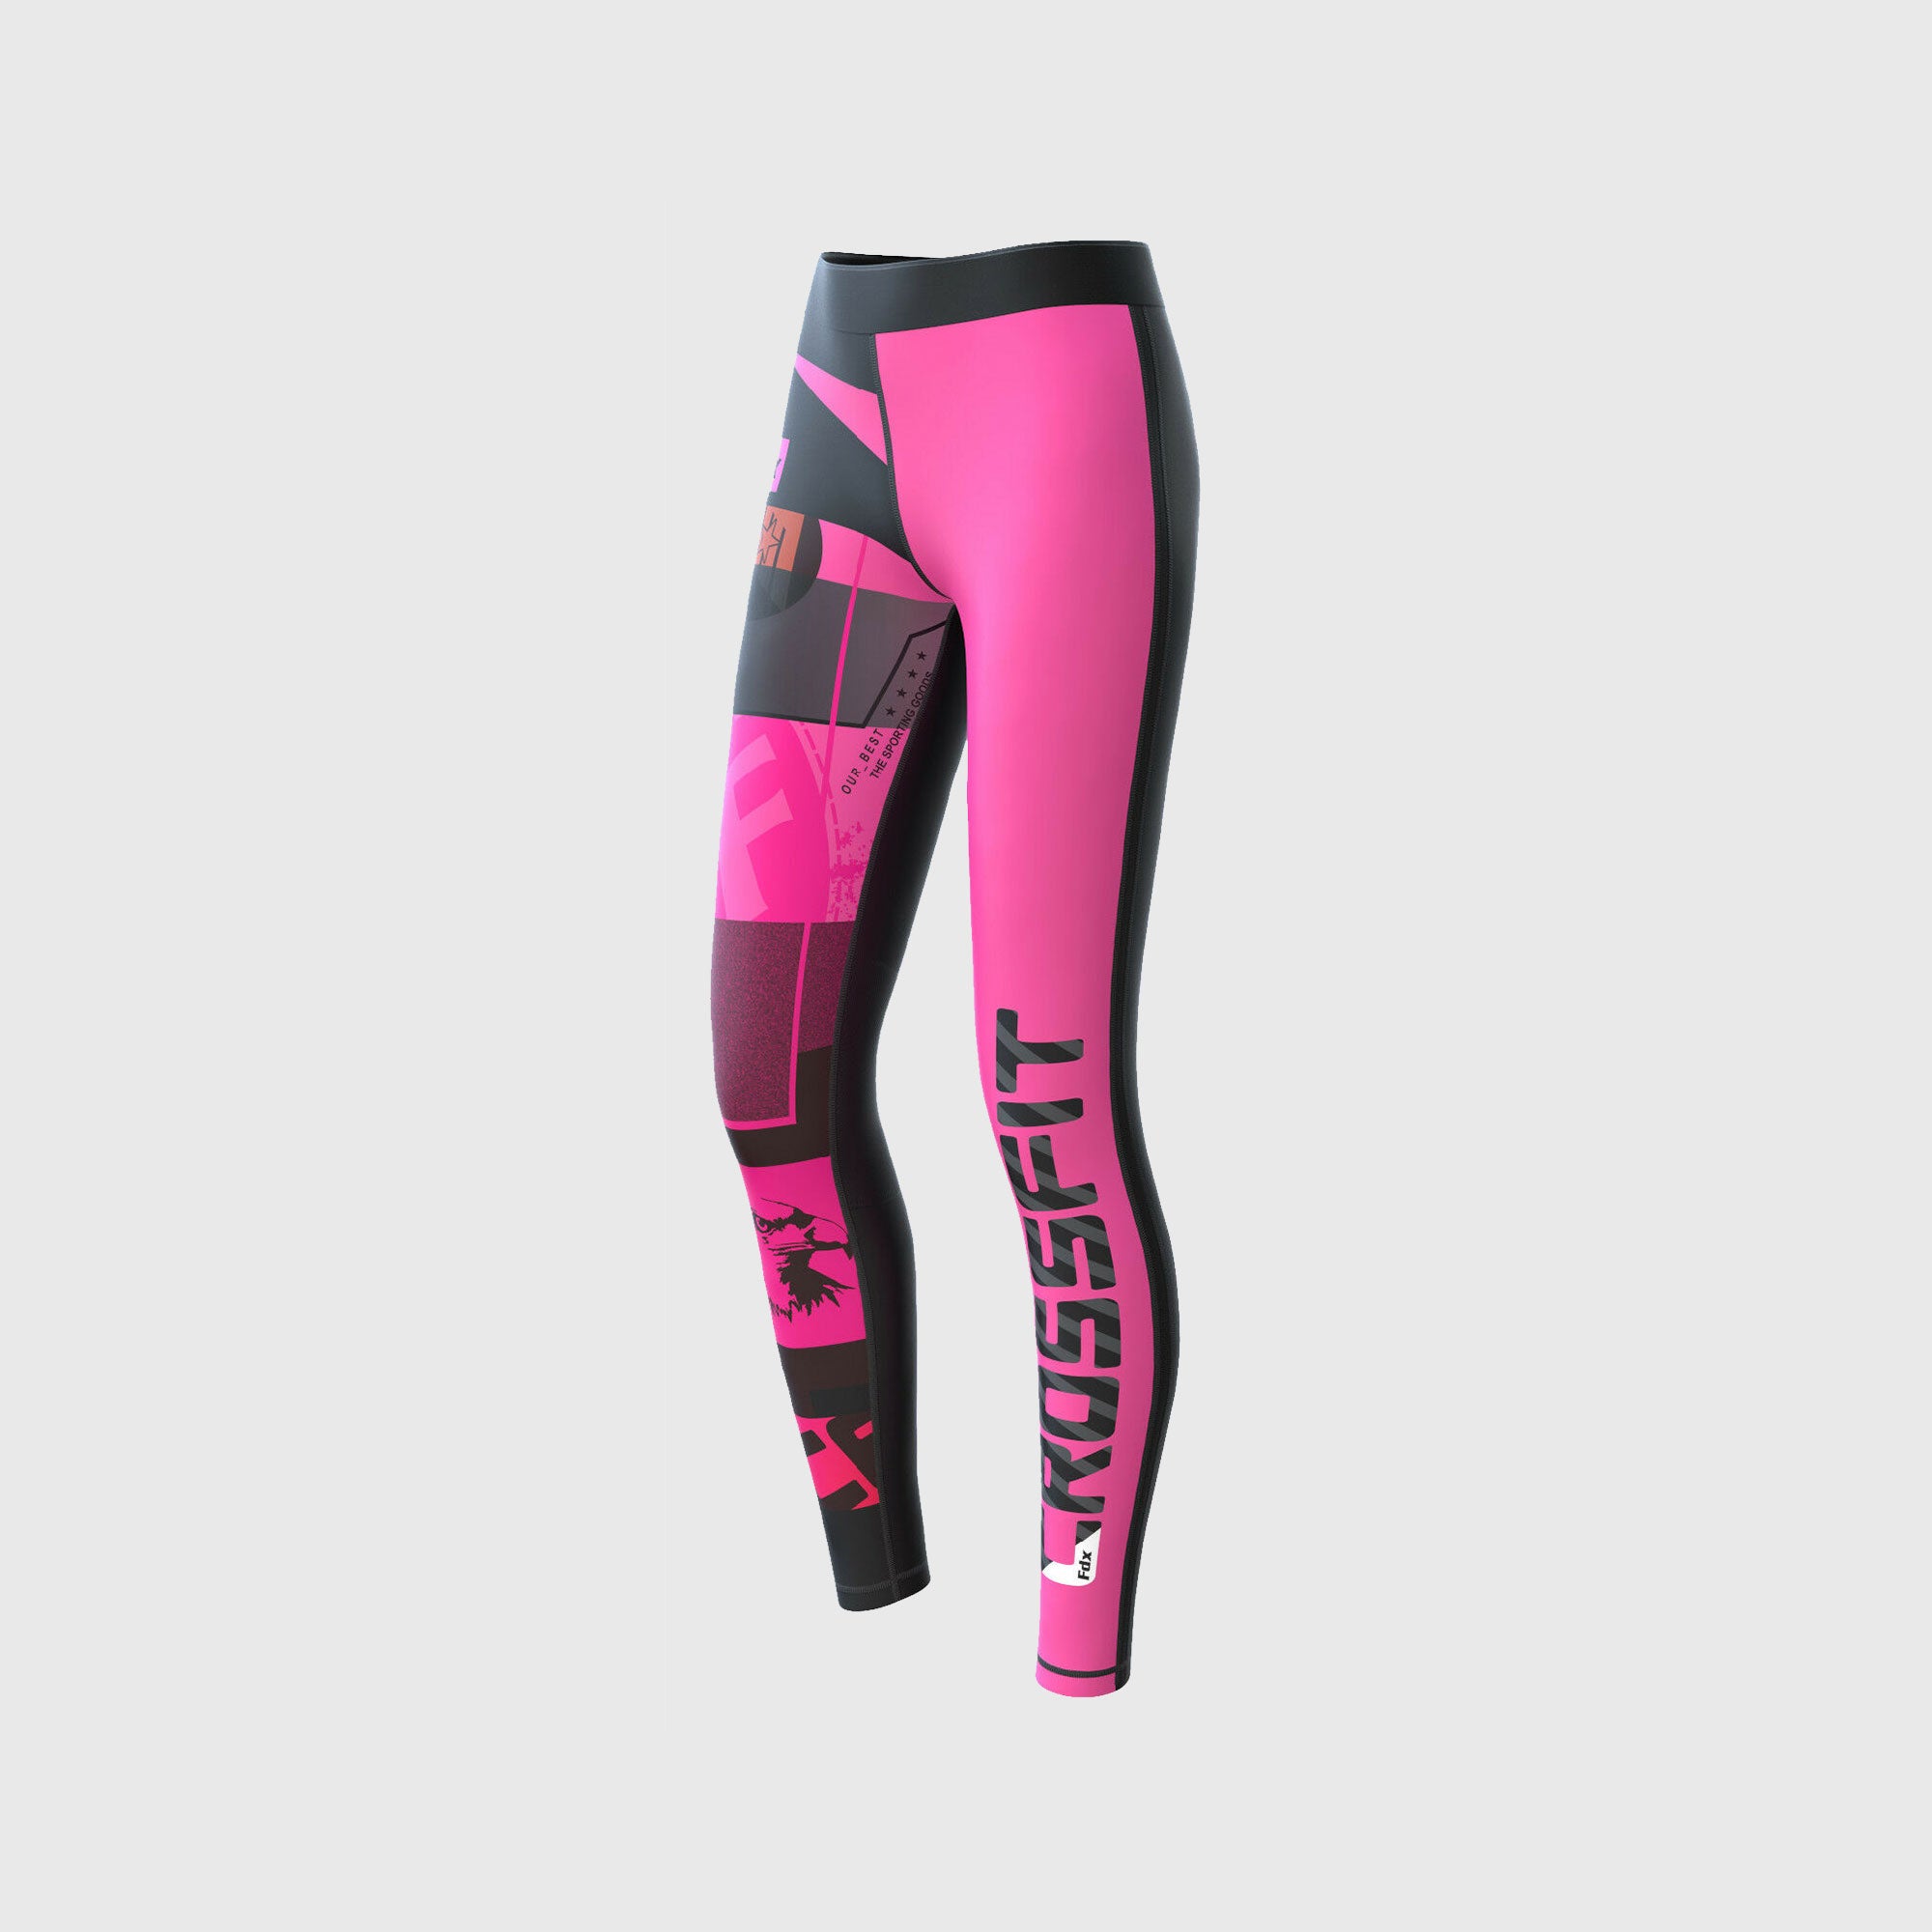 Fdx Black & Pink Compression Tights Leggings Gym Workout Running Athletic Yoga Elastic Waistband Stretchable Breathable Training Jogging Pants - Amrap